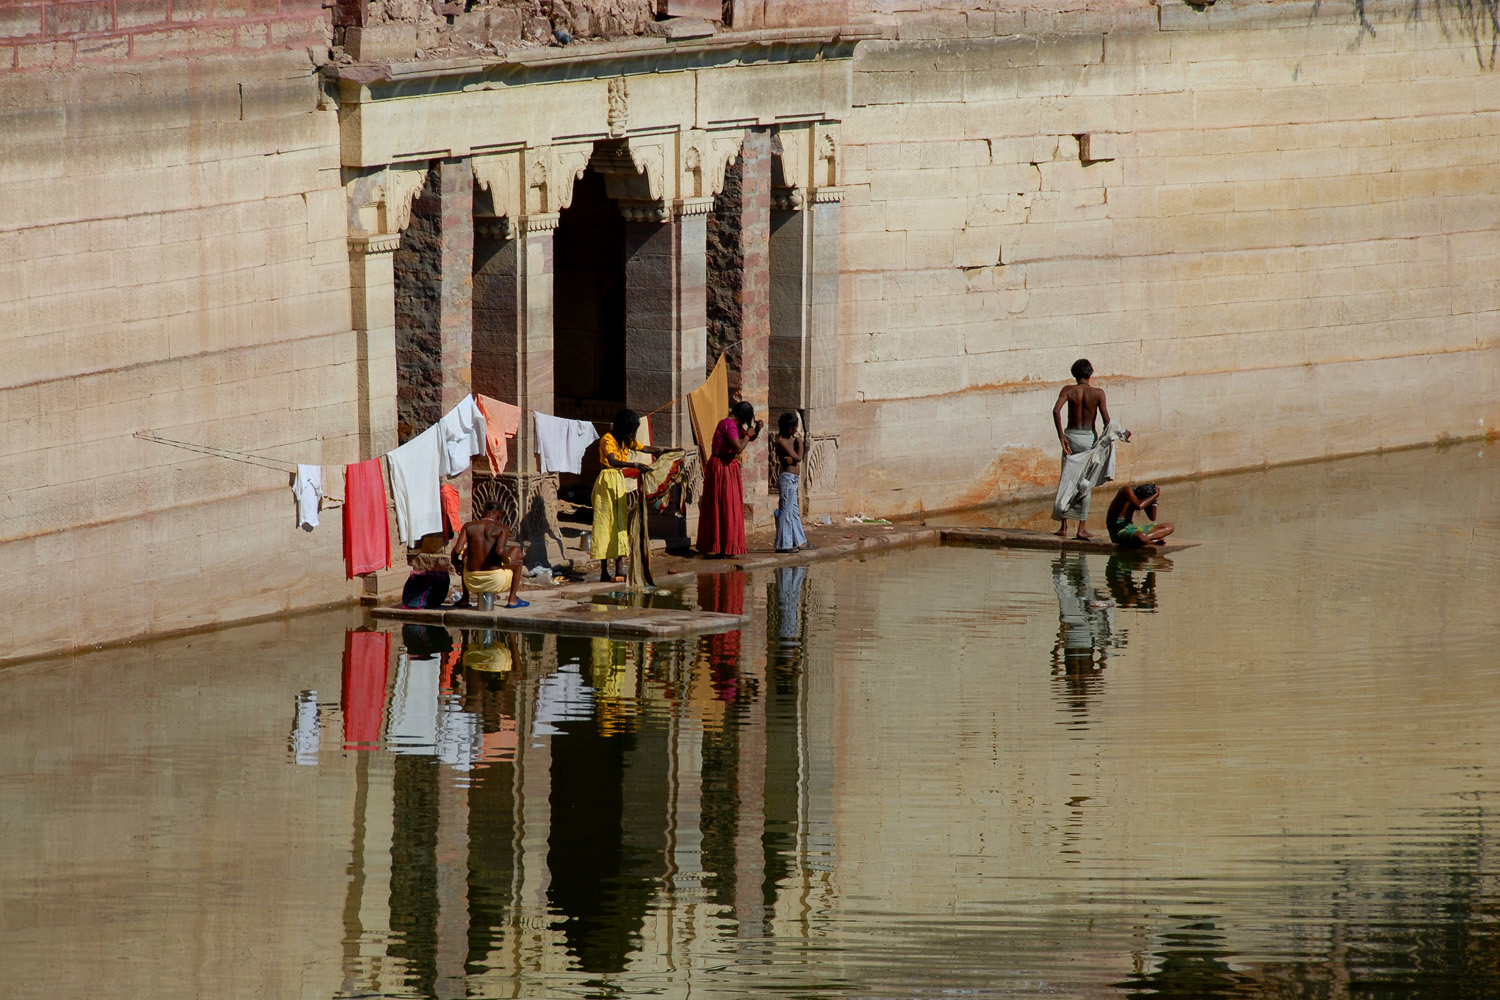 bill-hocker-gateway-gulab-sagar-jodhpur-india-2006